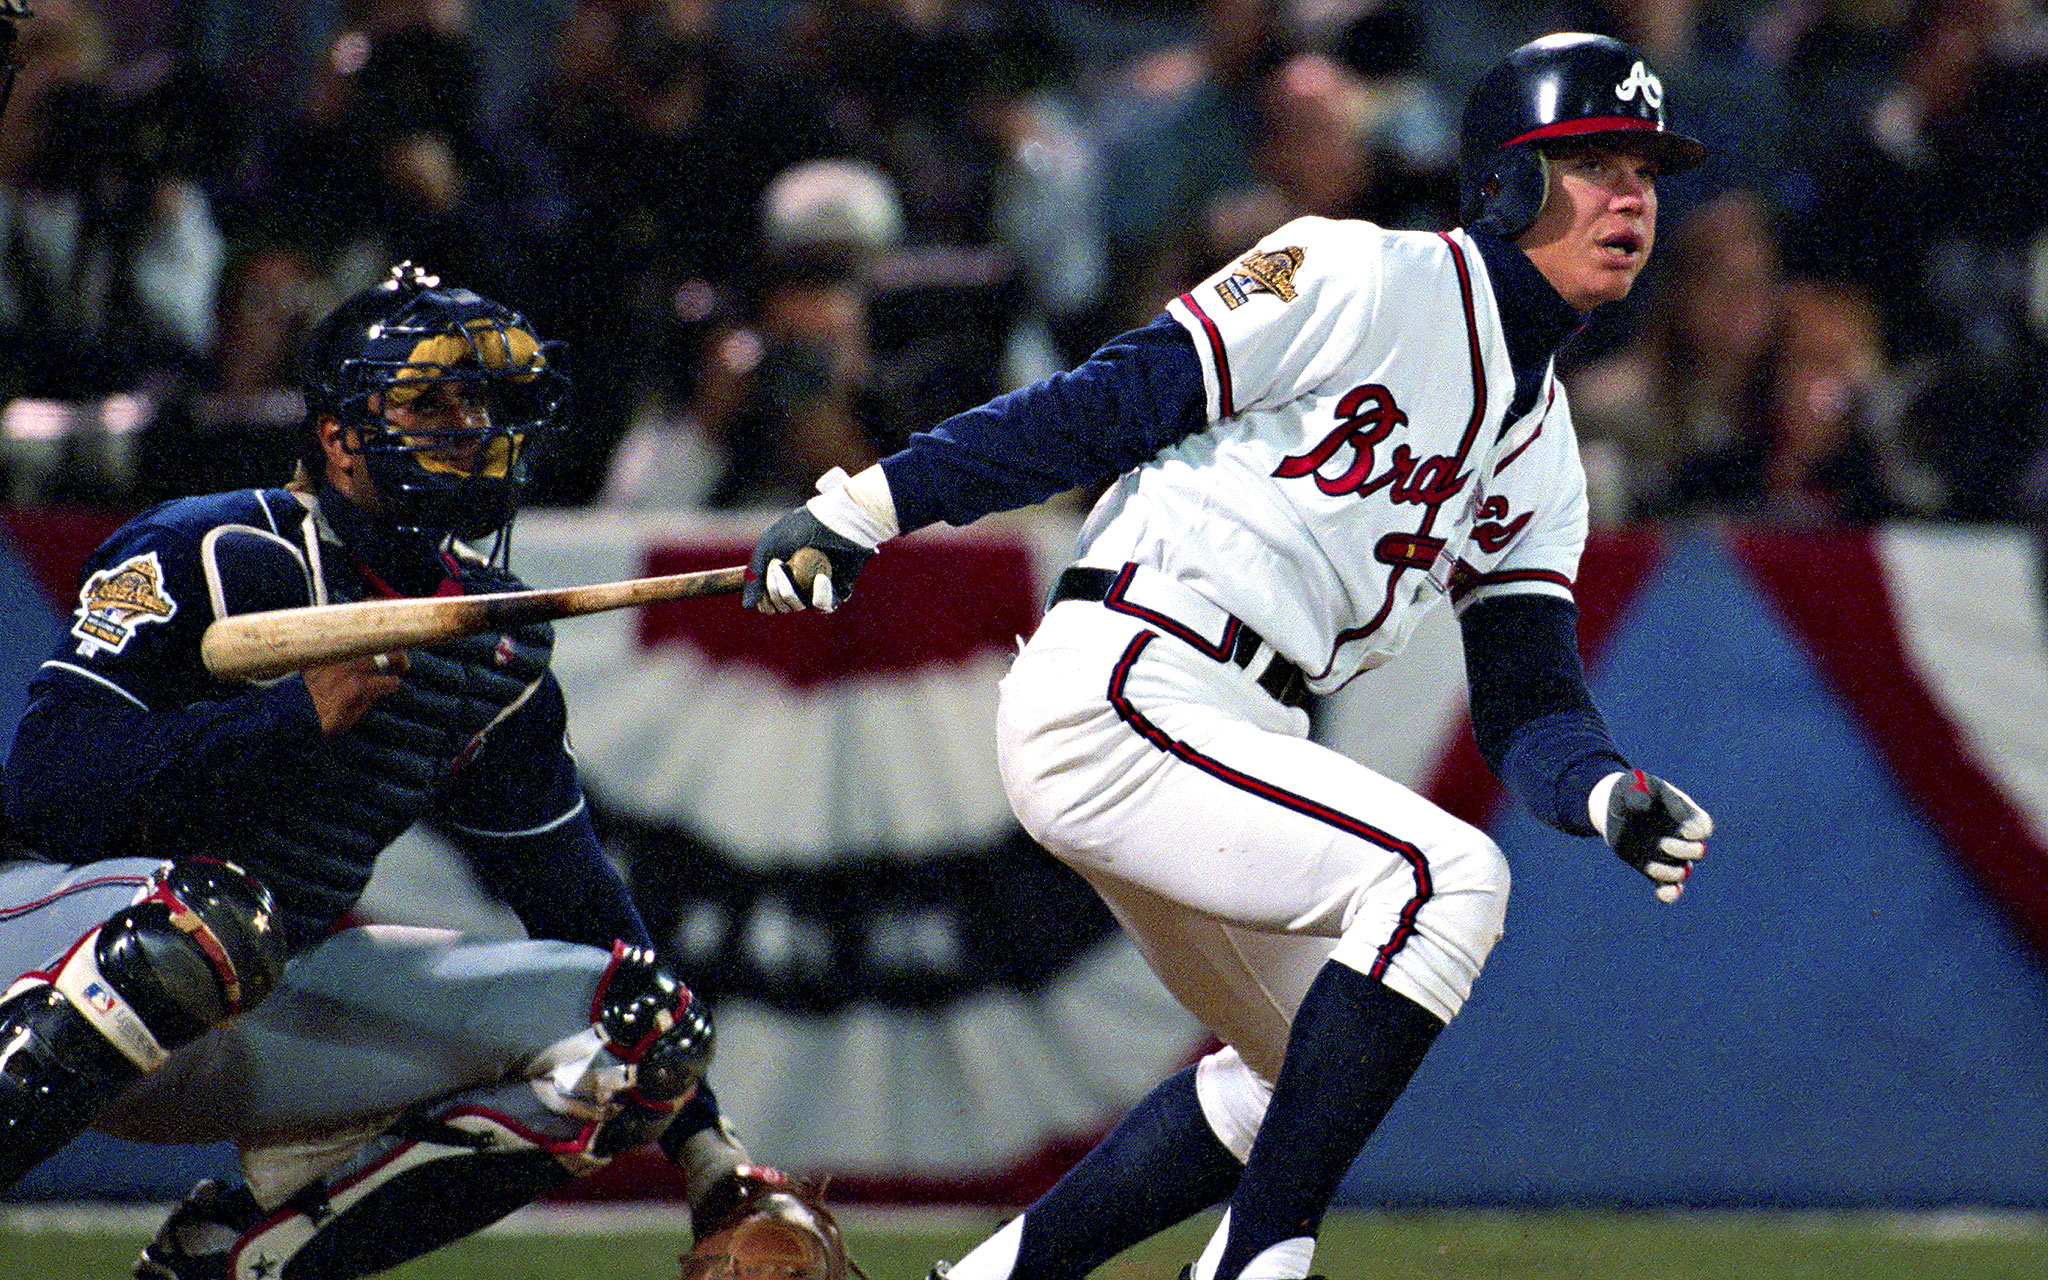 Game 4 — 1995 World Series — Wednesday, October 25, 1995 — Braves